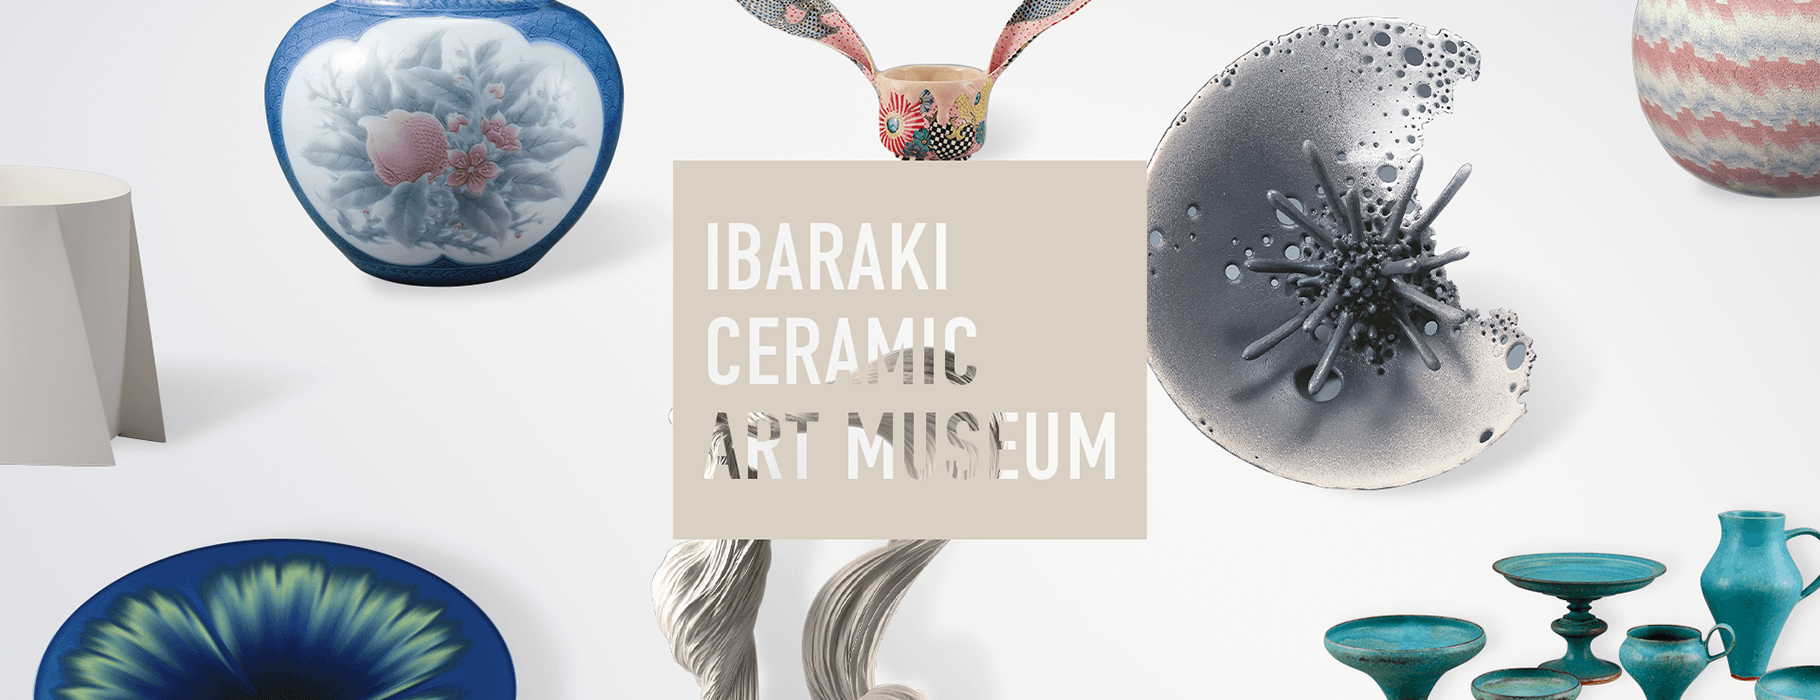 IBARAKI CERAMIC ART MUSEUM